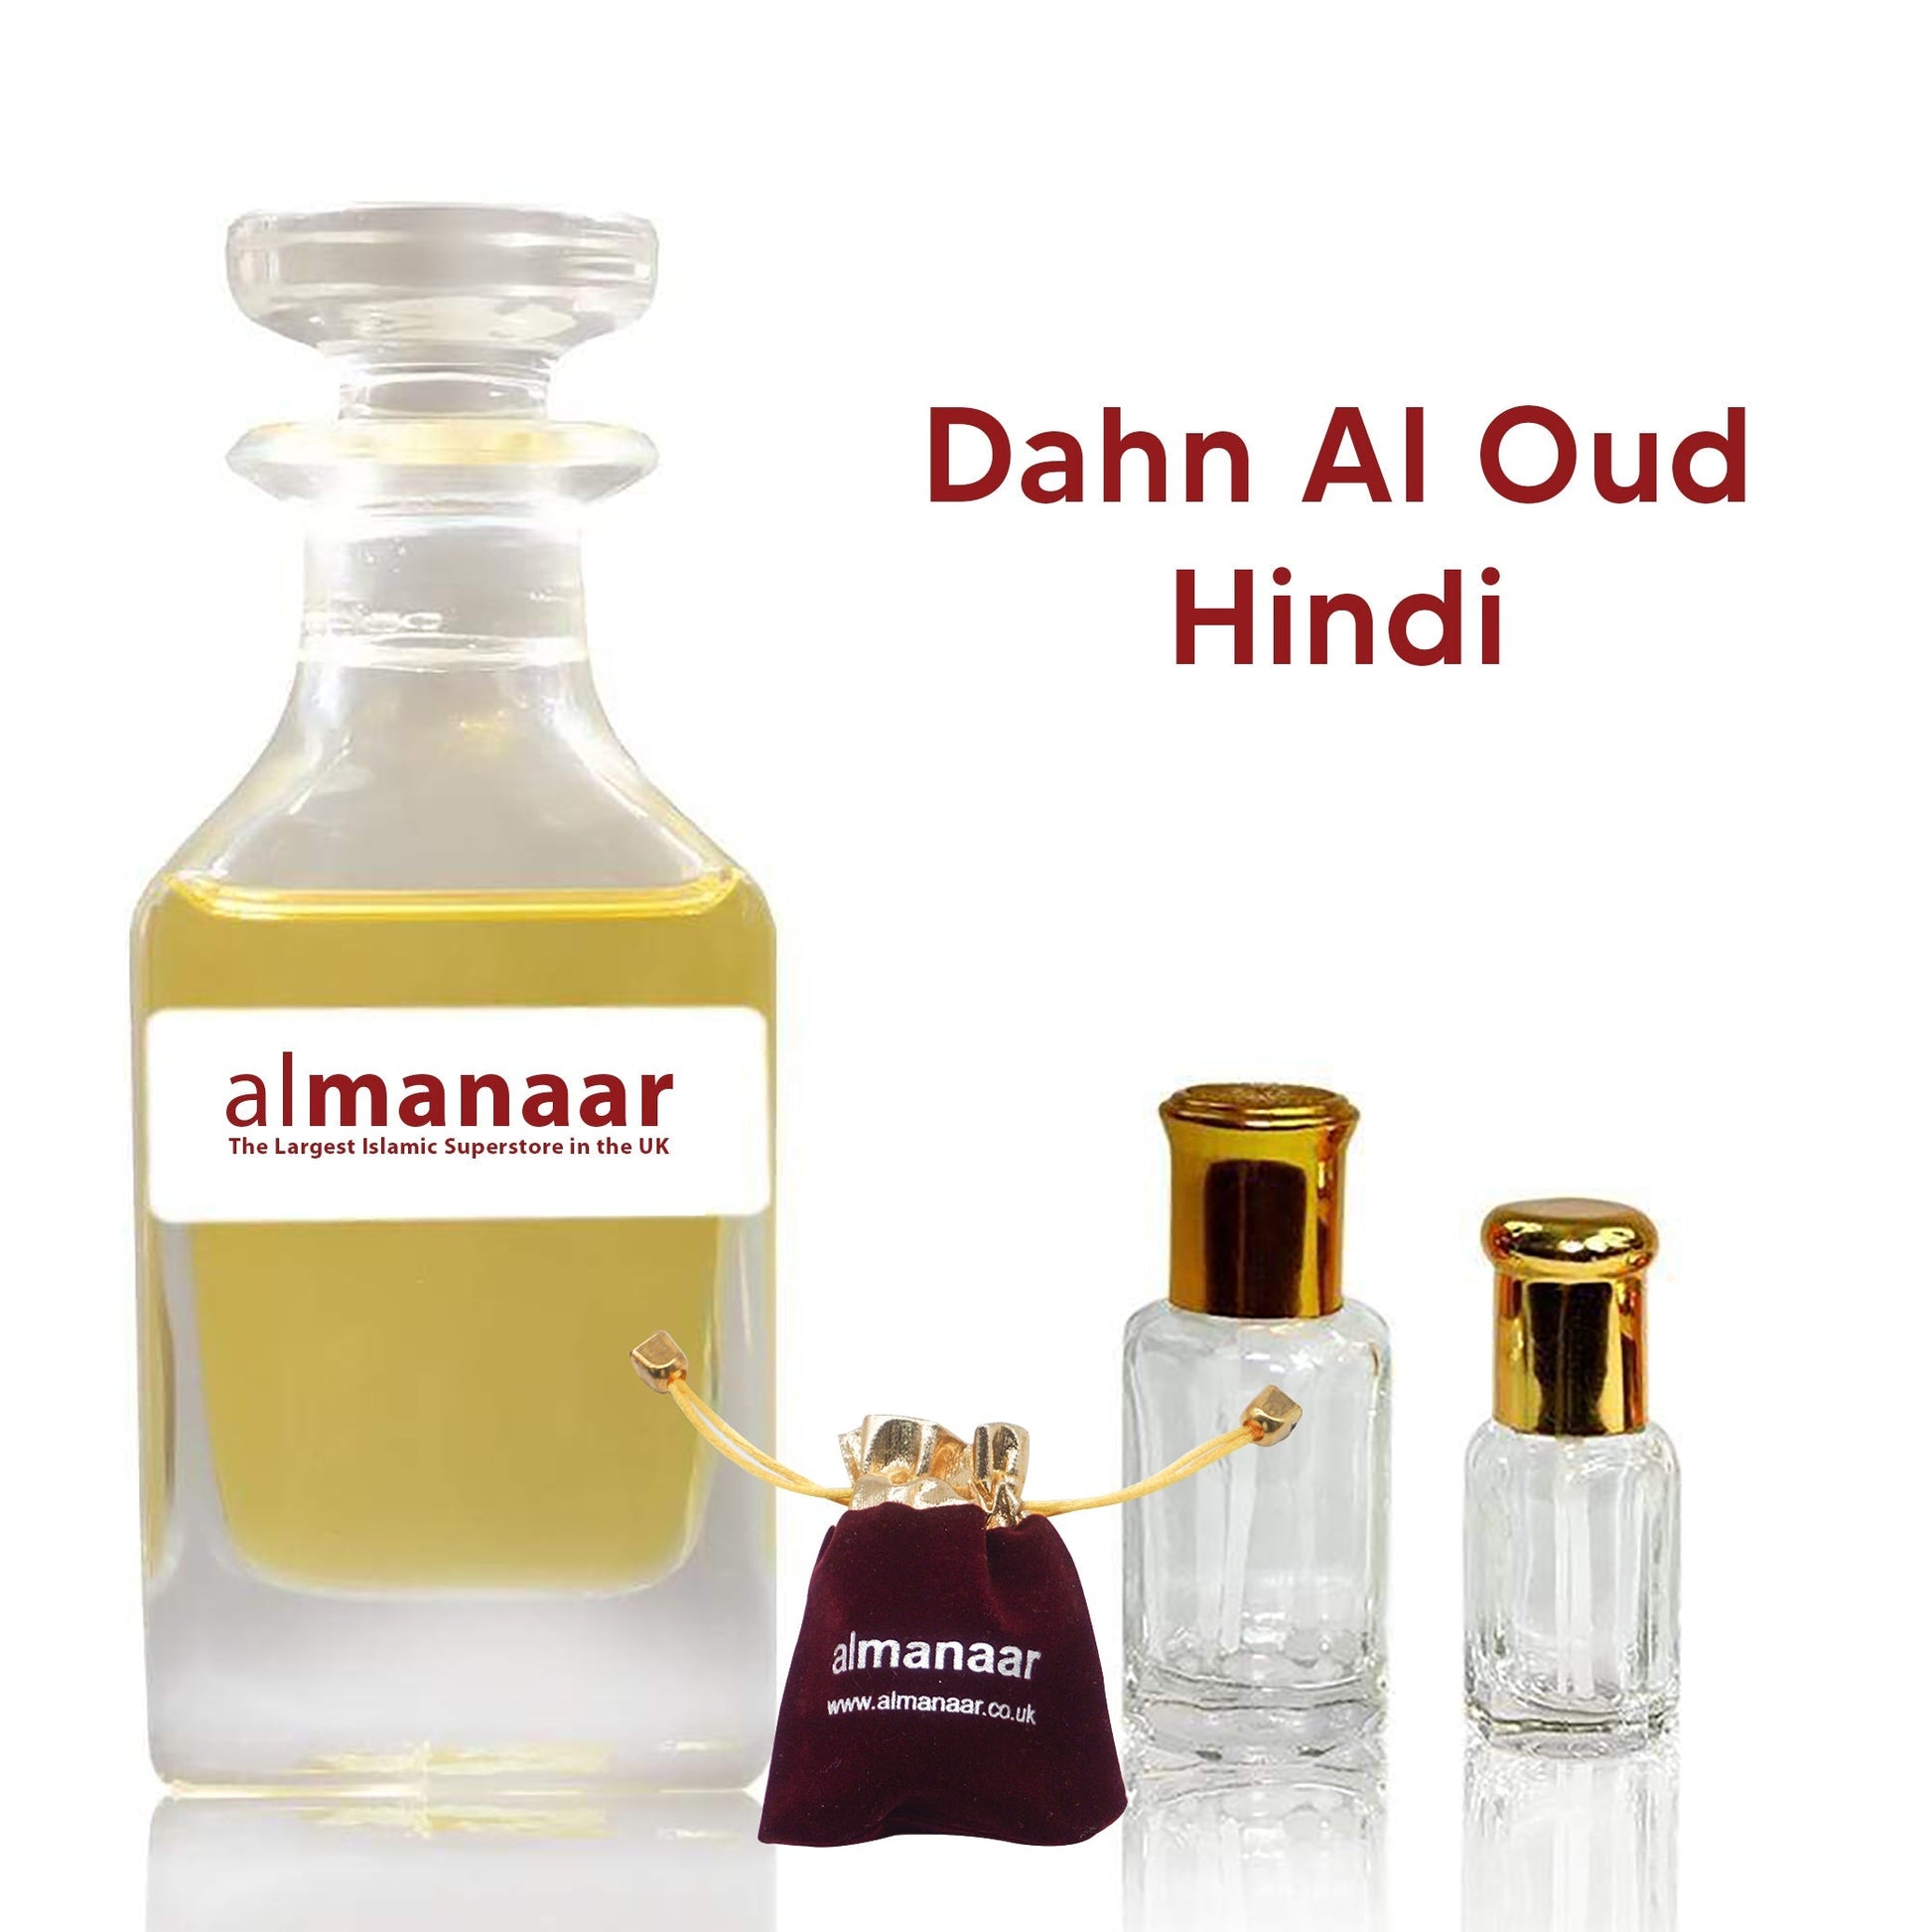 Dahn Al Oud Hindi - Concentrated Perfume Oil by almanaar-almanaar Islamic Store